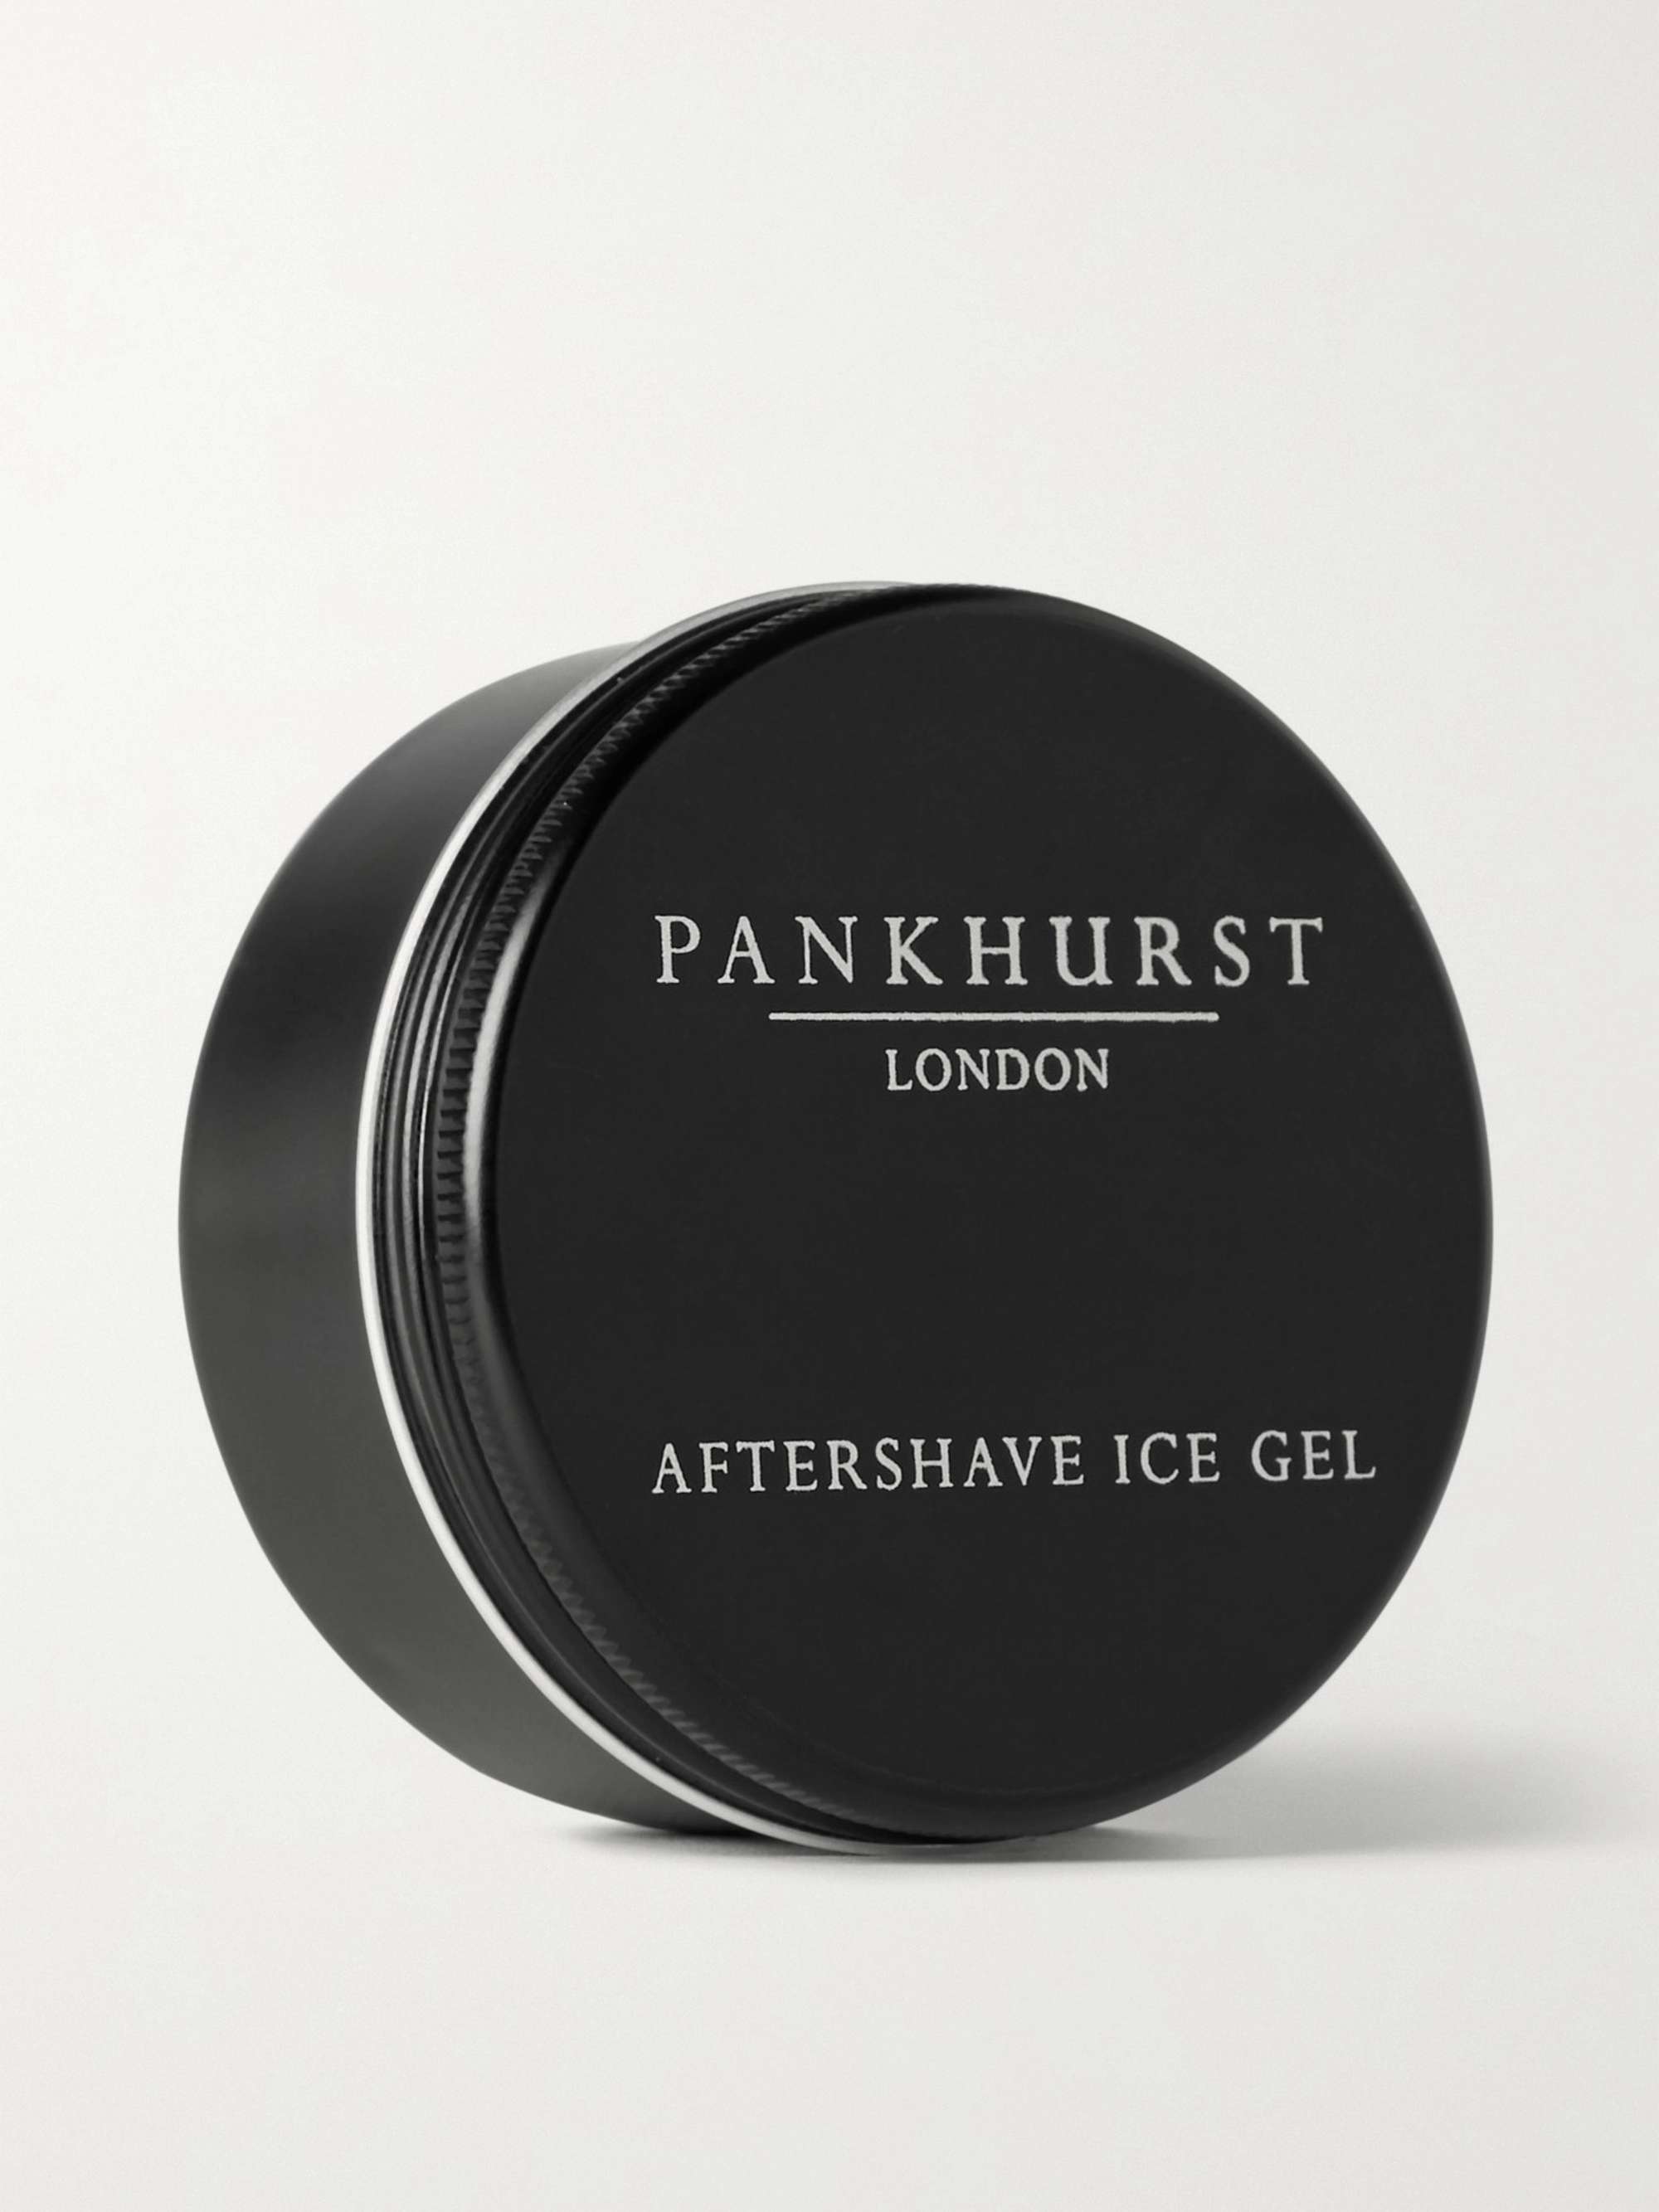 PANKHURST LONDON Aftershave Ice Gel, 75ml